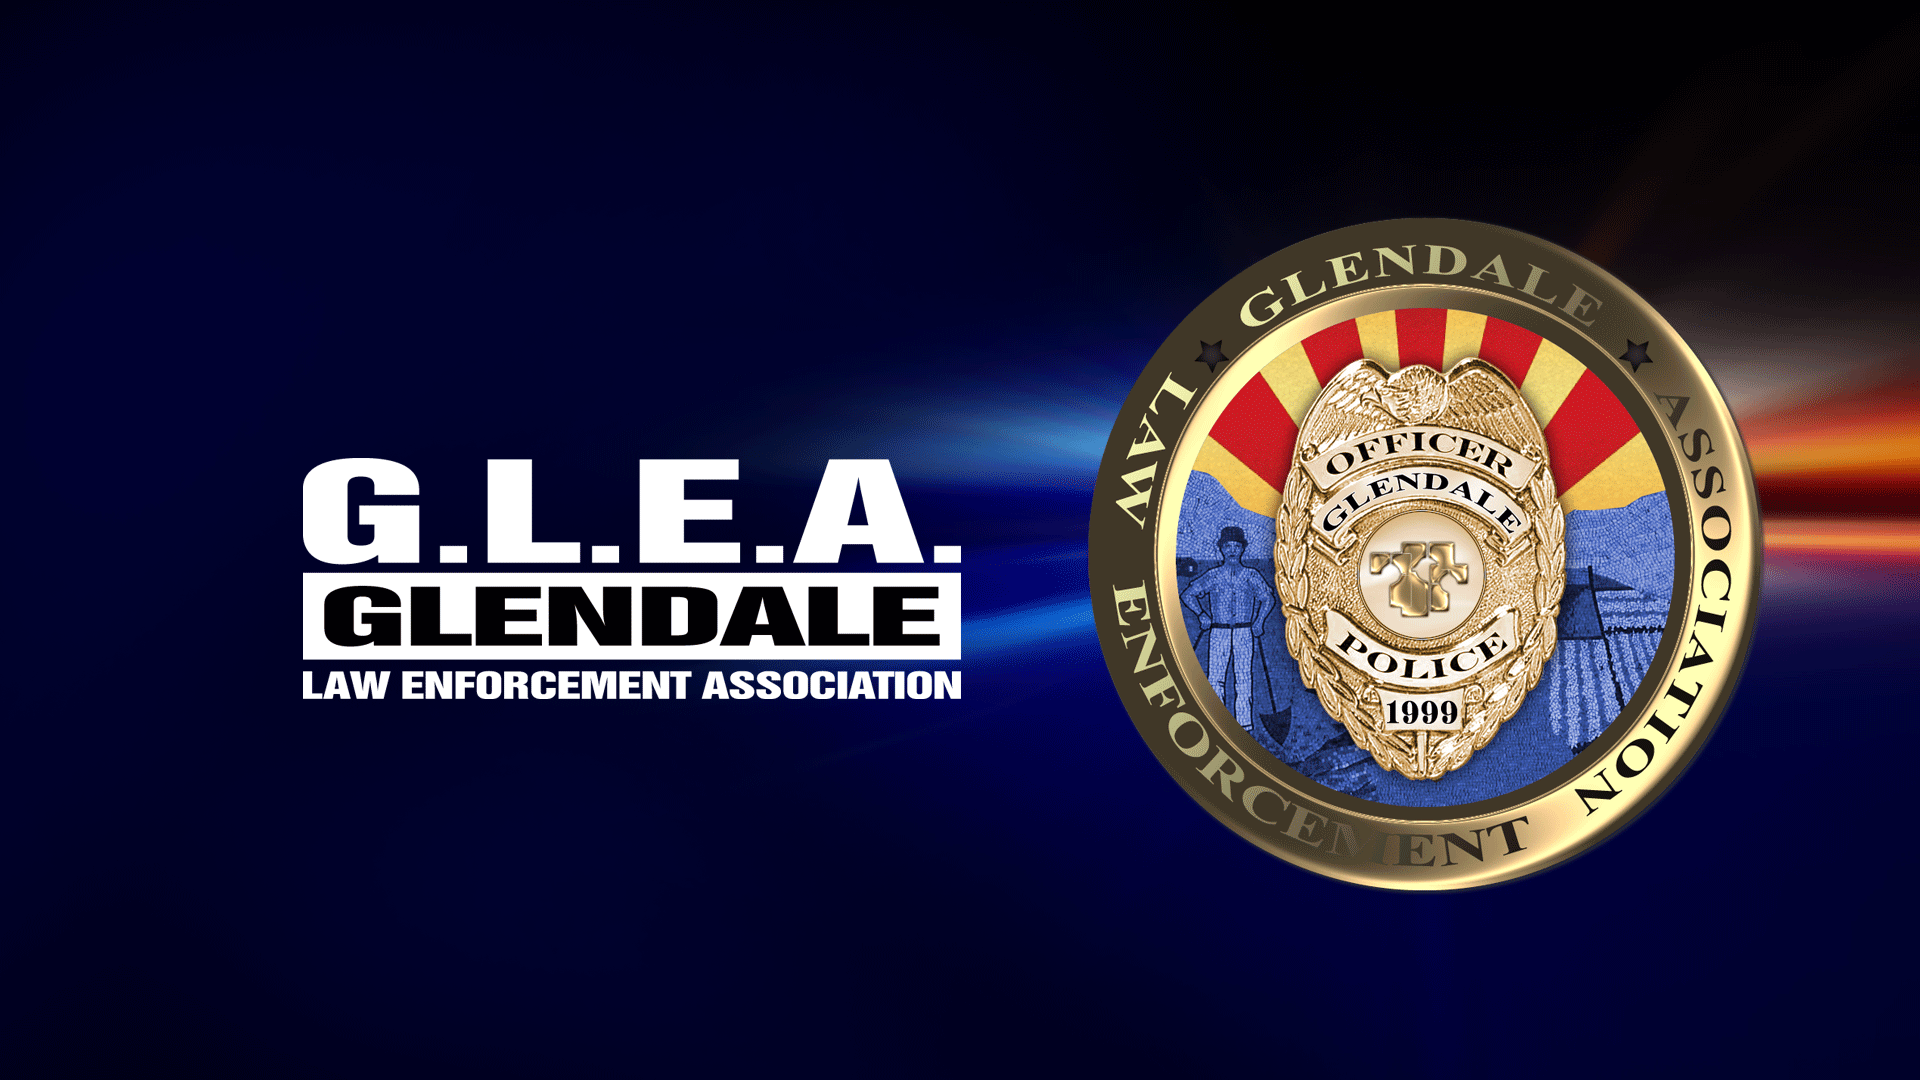 Glendale Law Enforcement Association Wallpaper 1920x1080